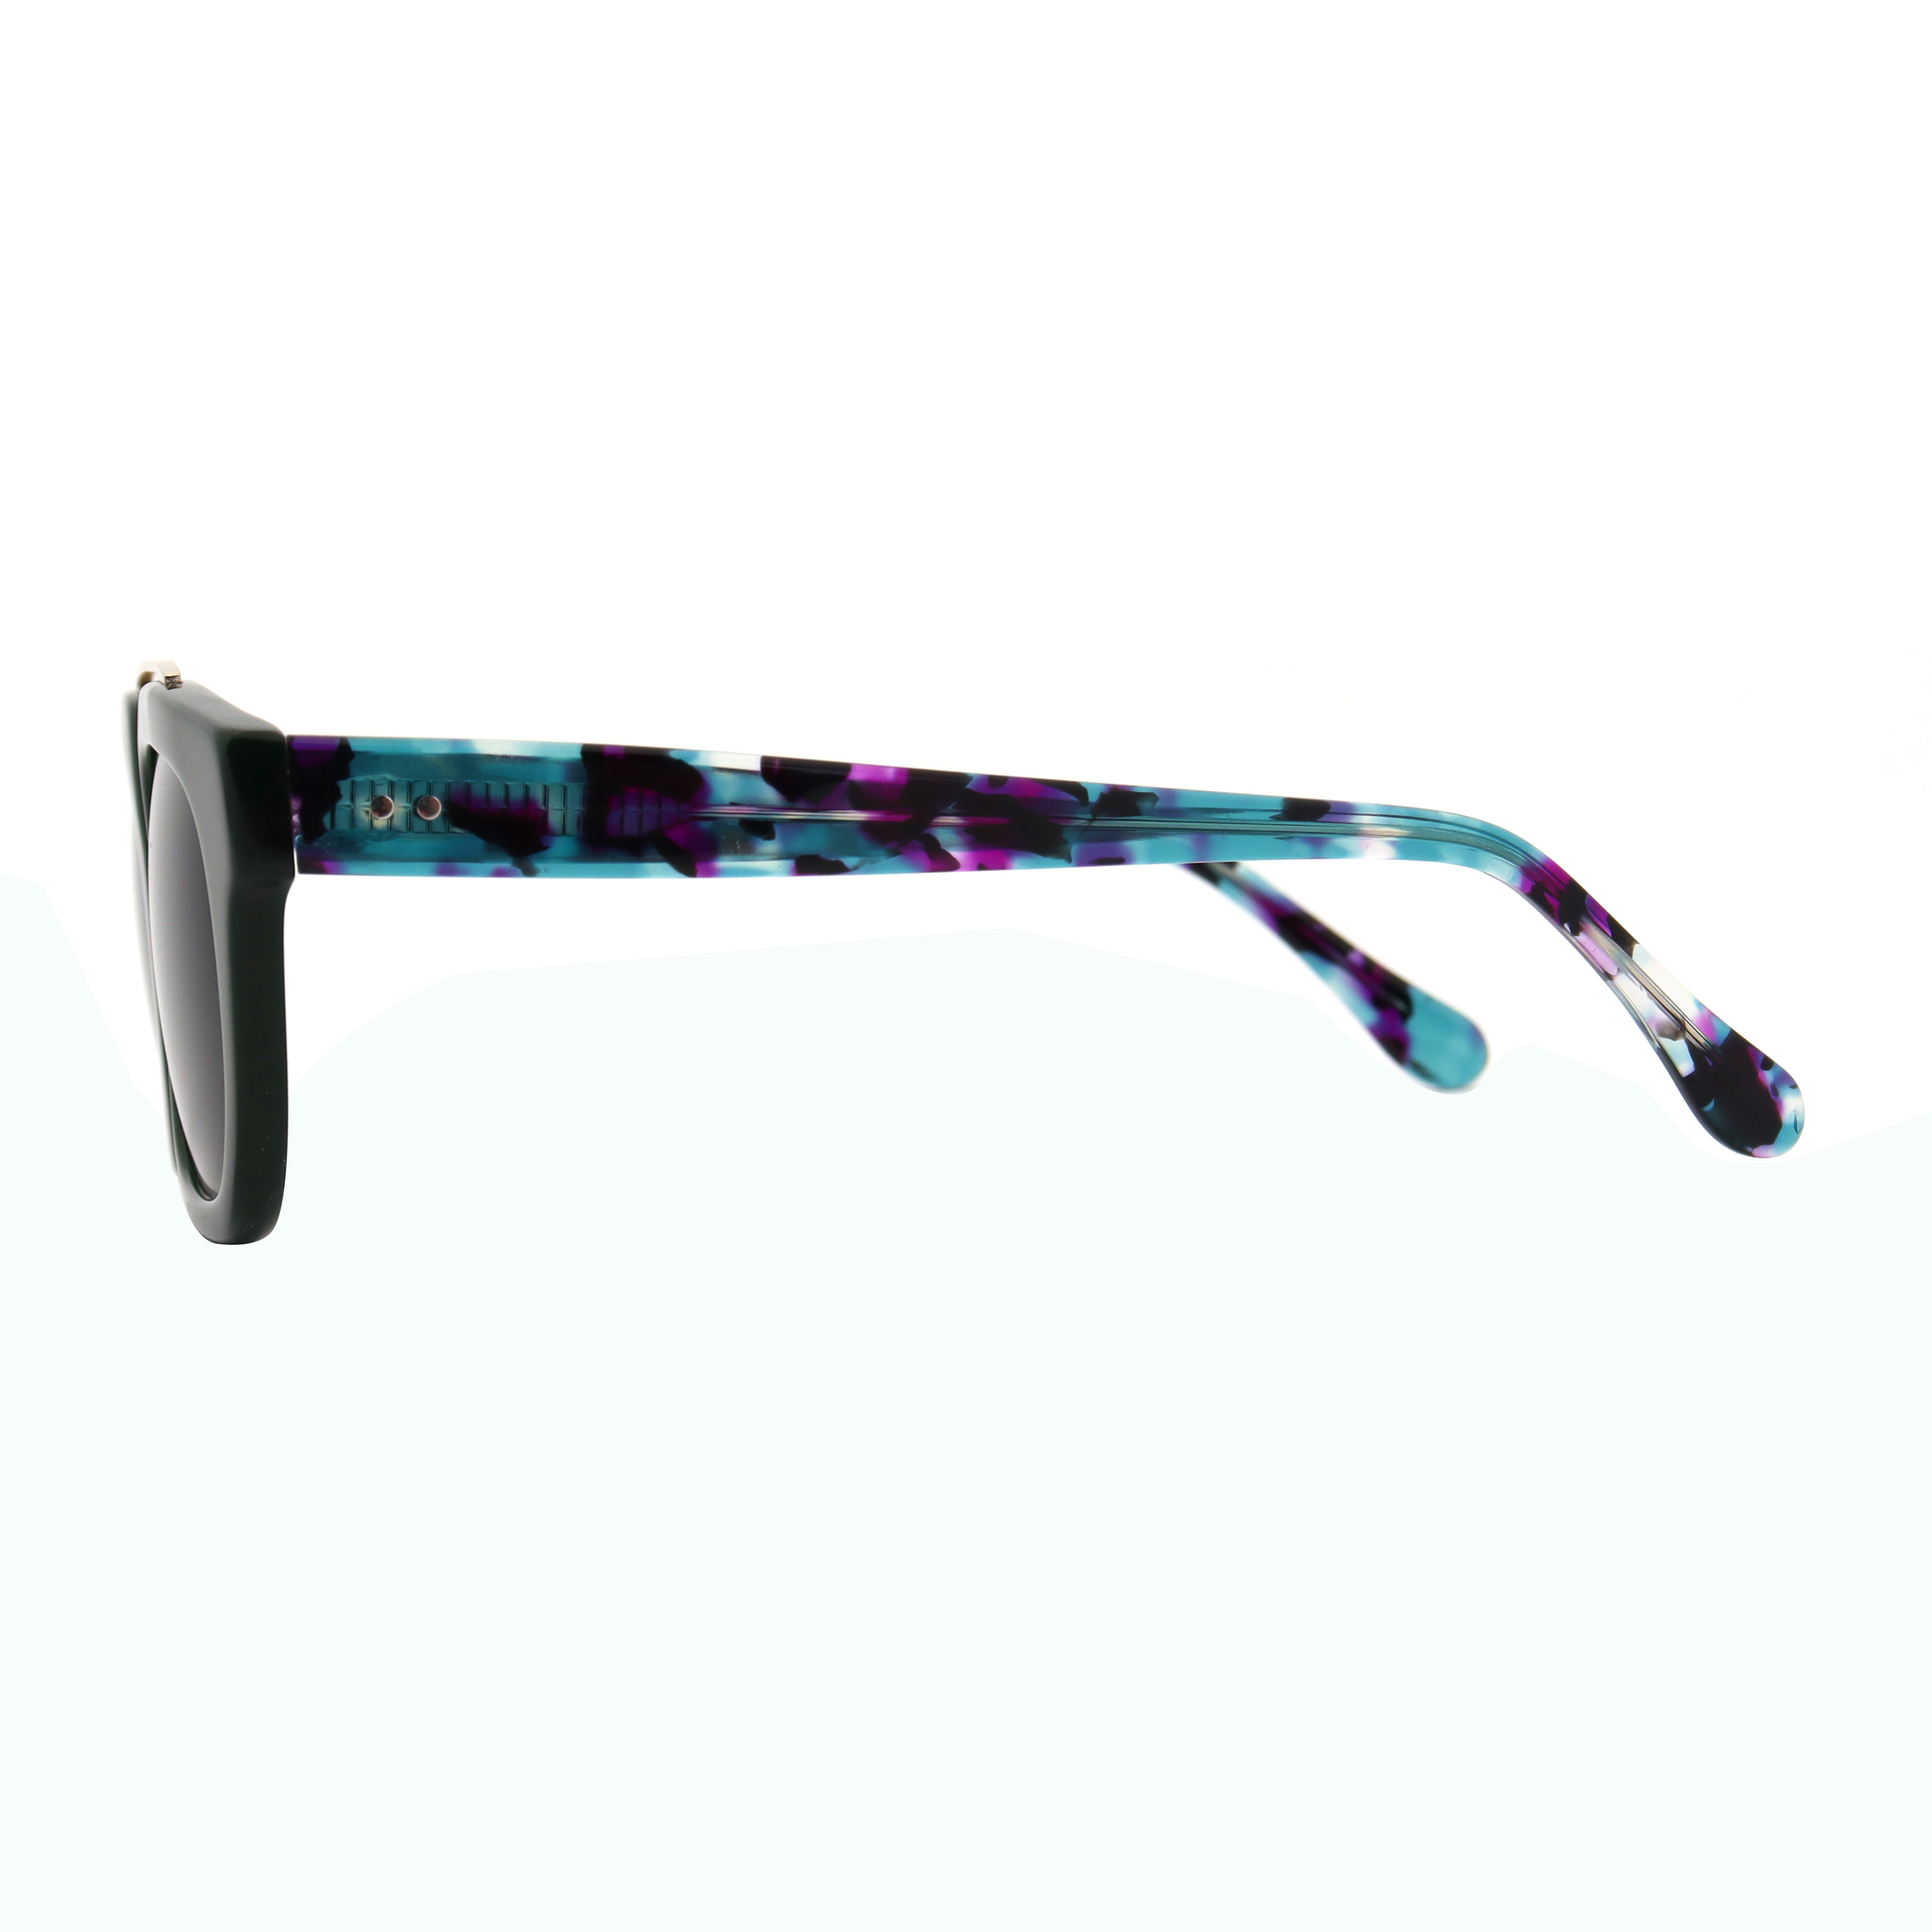 Boldly fashion double bridge acetate sunglasses